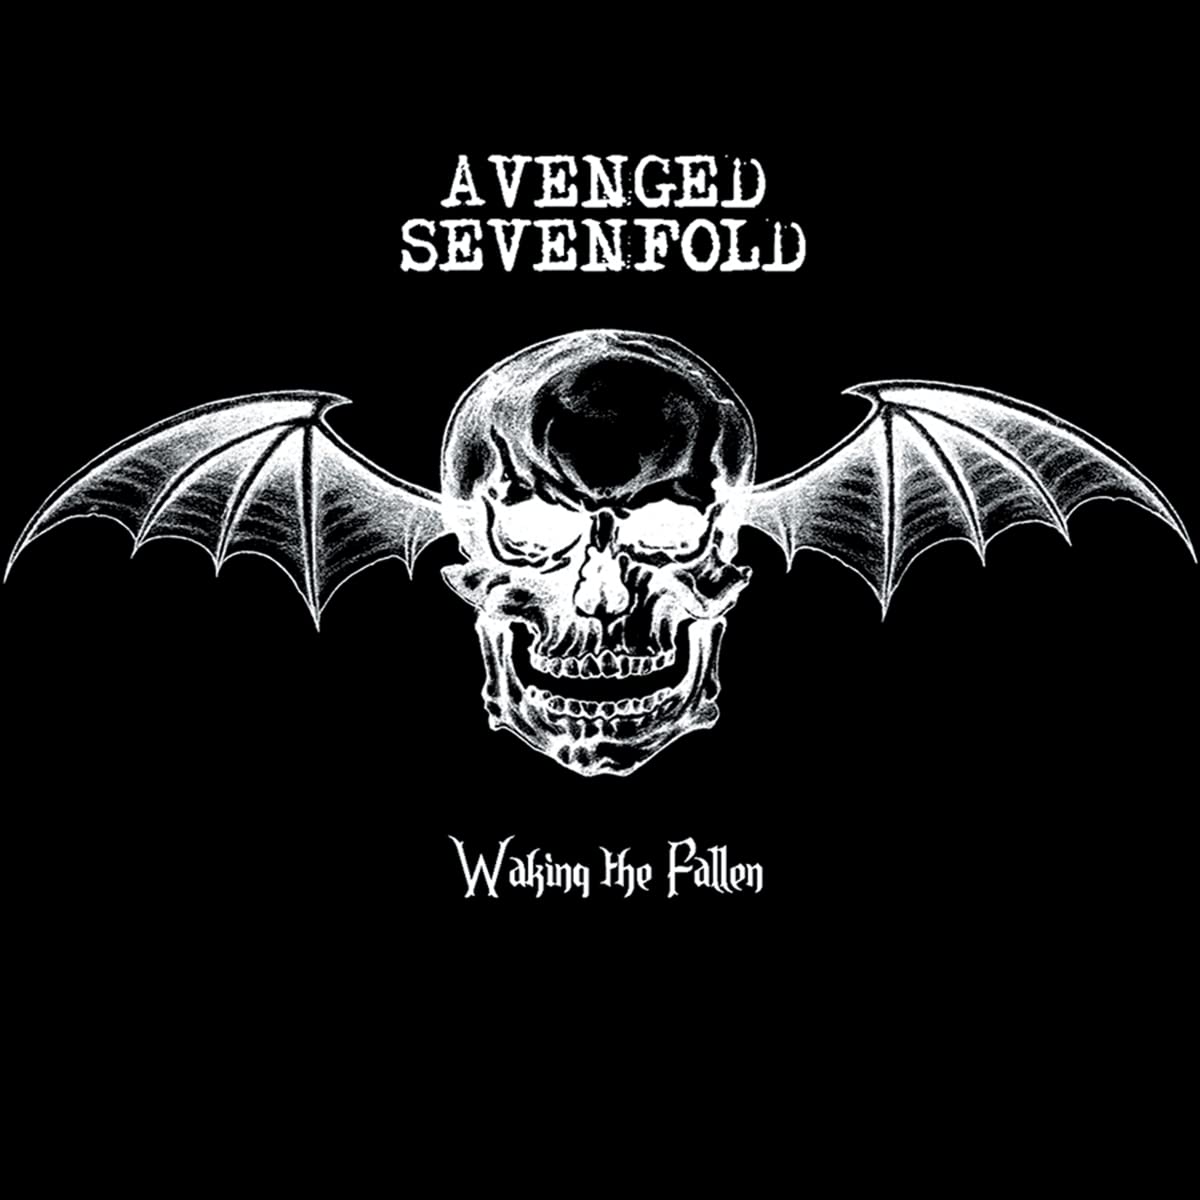 Avenged Sevenfold > Loudwire